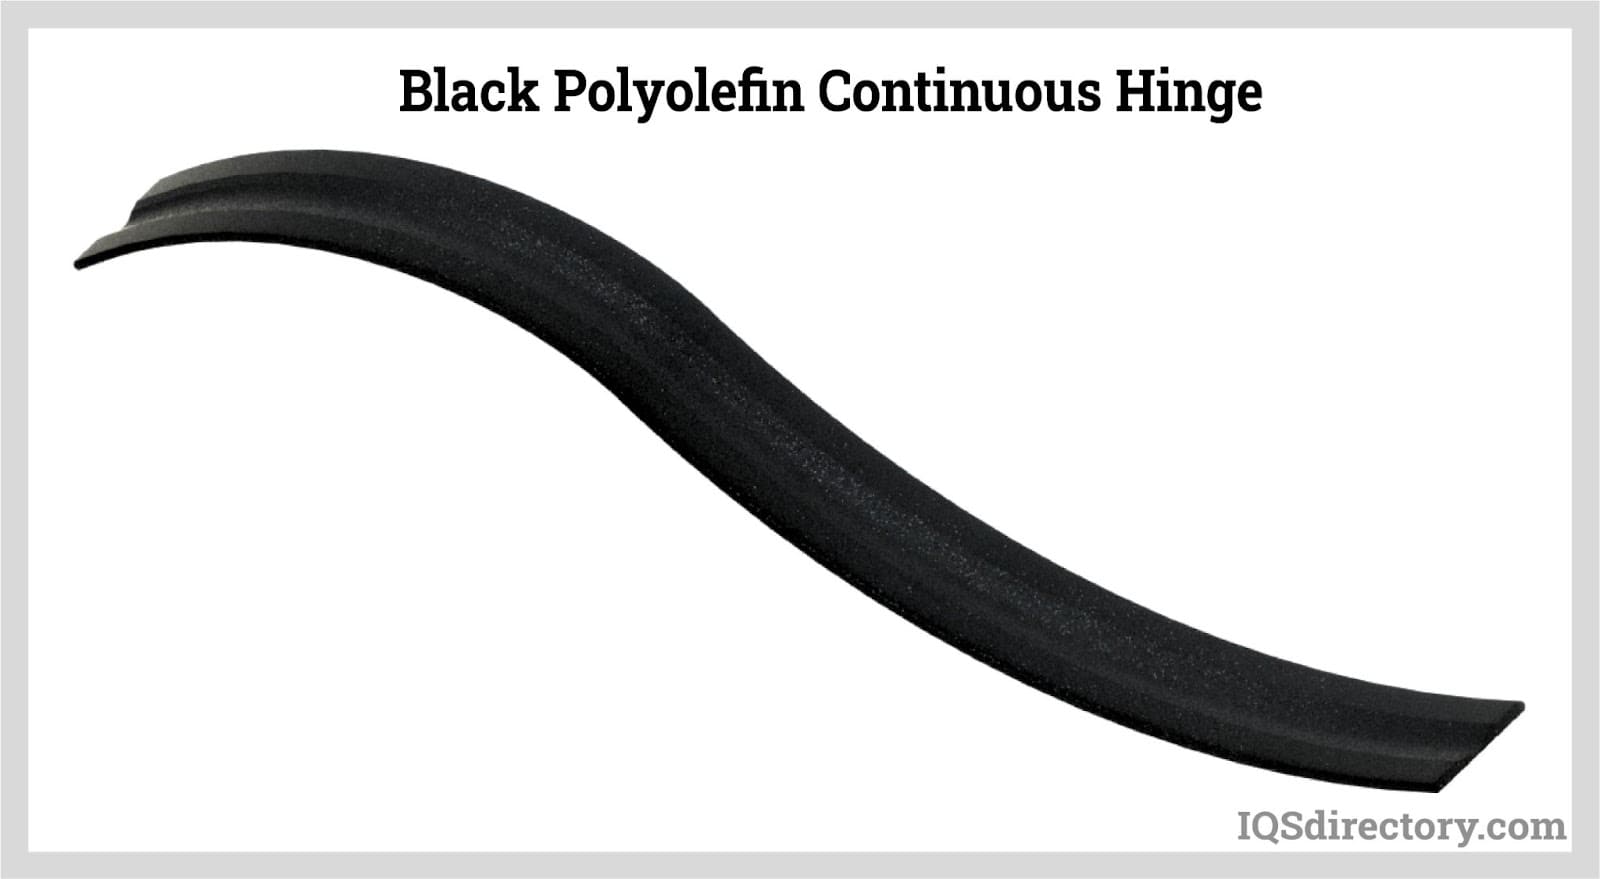 Black Polyolefin Continuous Hinge